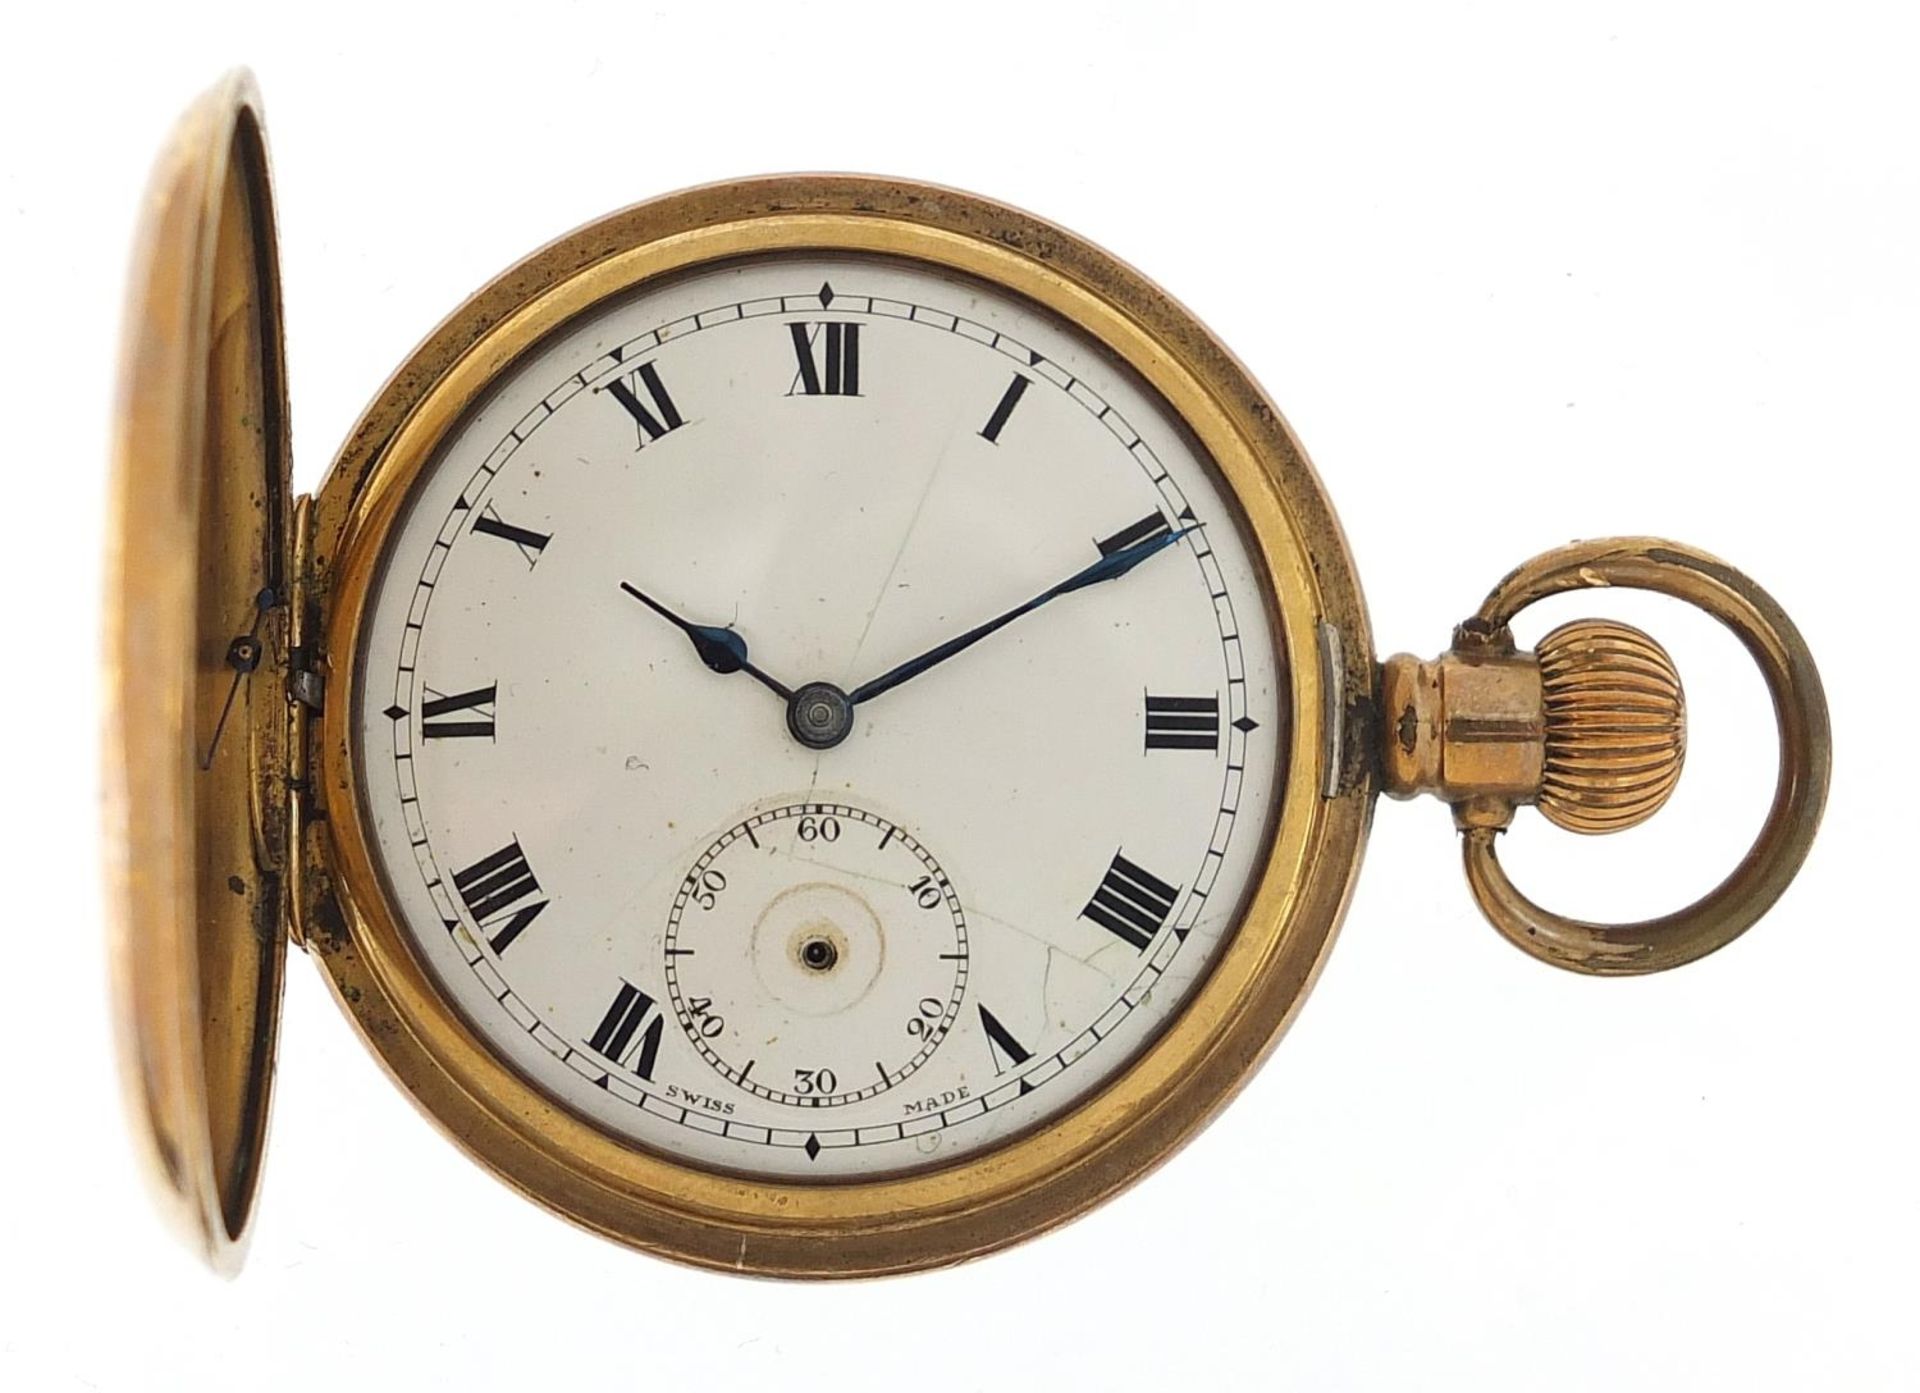 Gentlemen's gold plated half hunter pocket watch with enamel dial, 5.1cm in diameter, 100.7g - Image 2 of 6